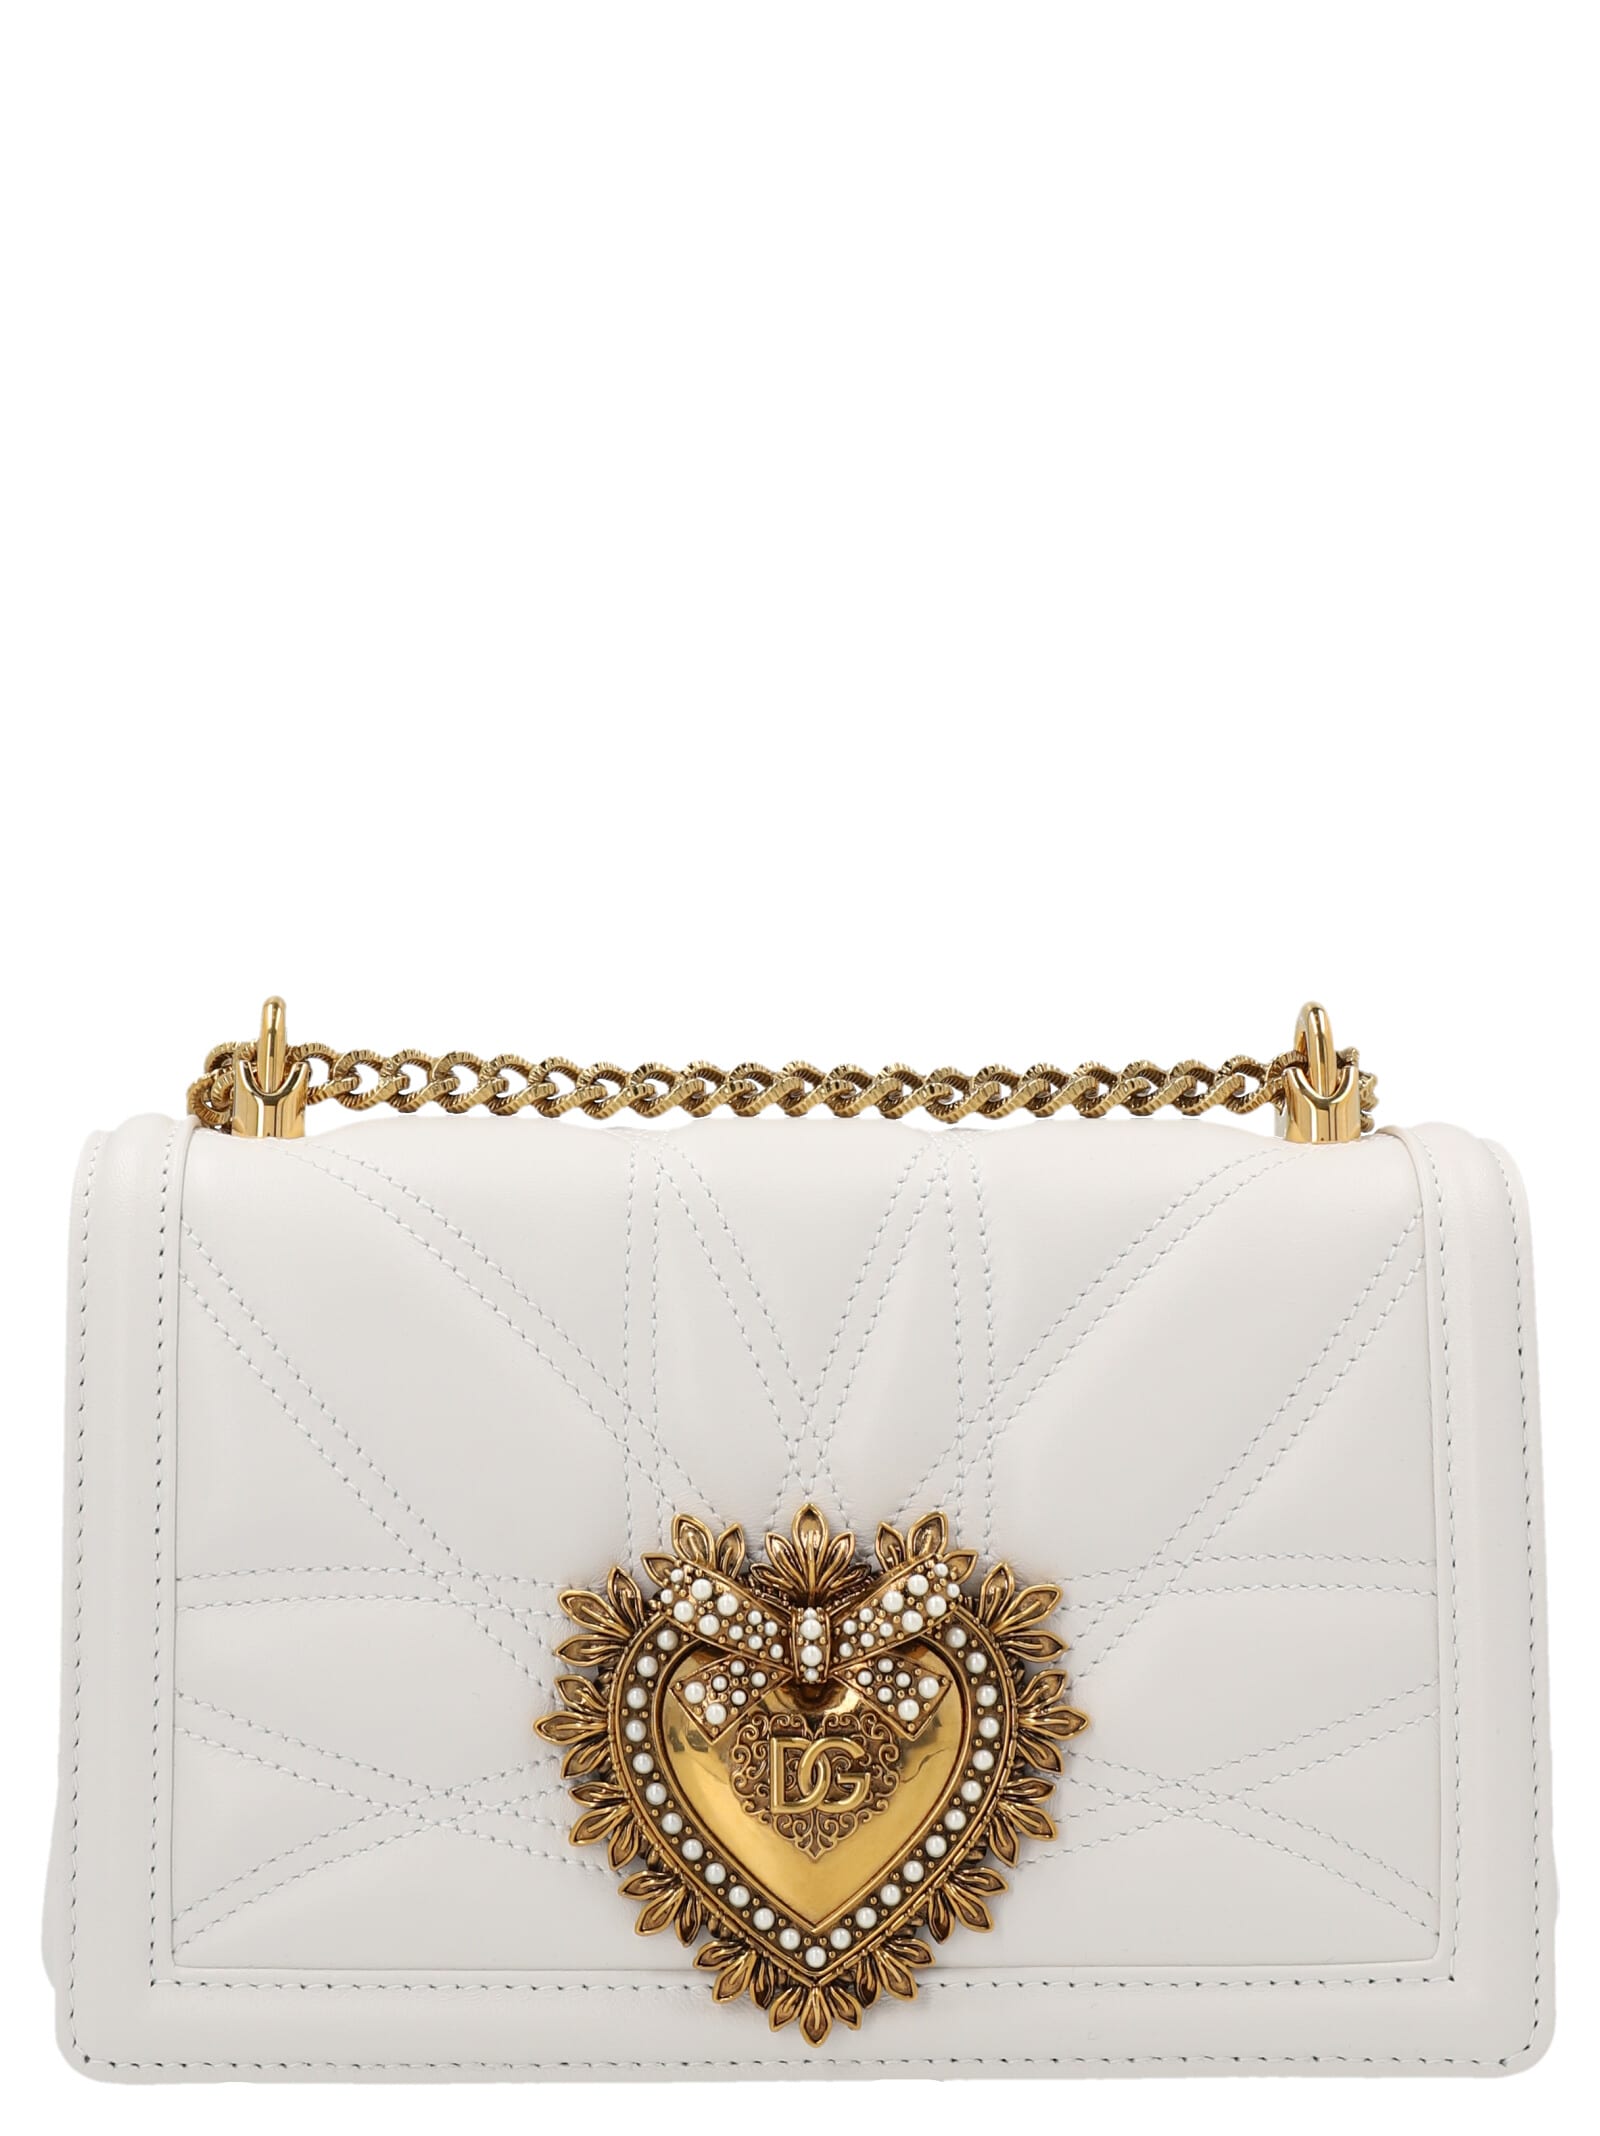 Dolce & Gabbana devotion Midi Handbag